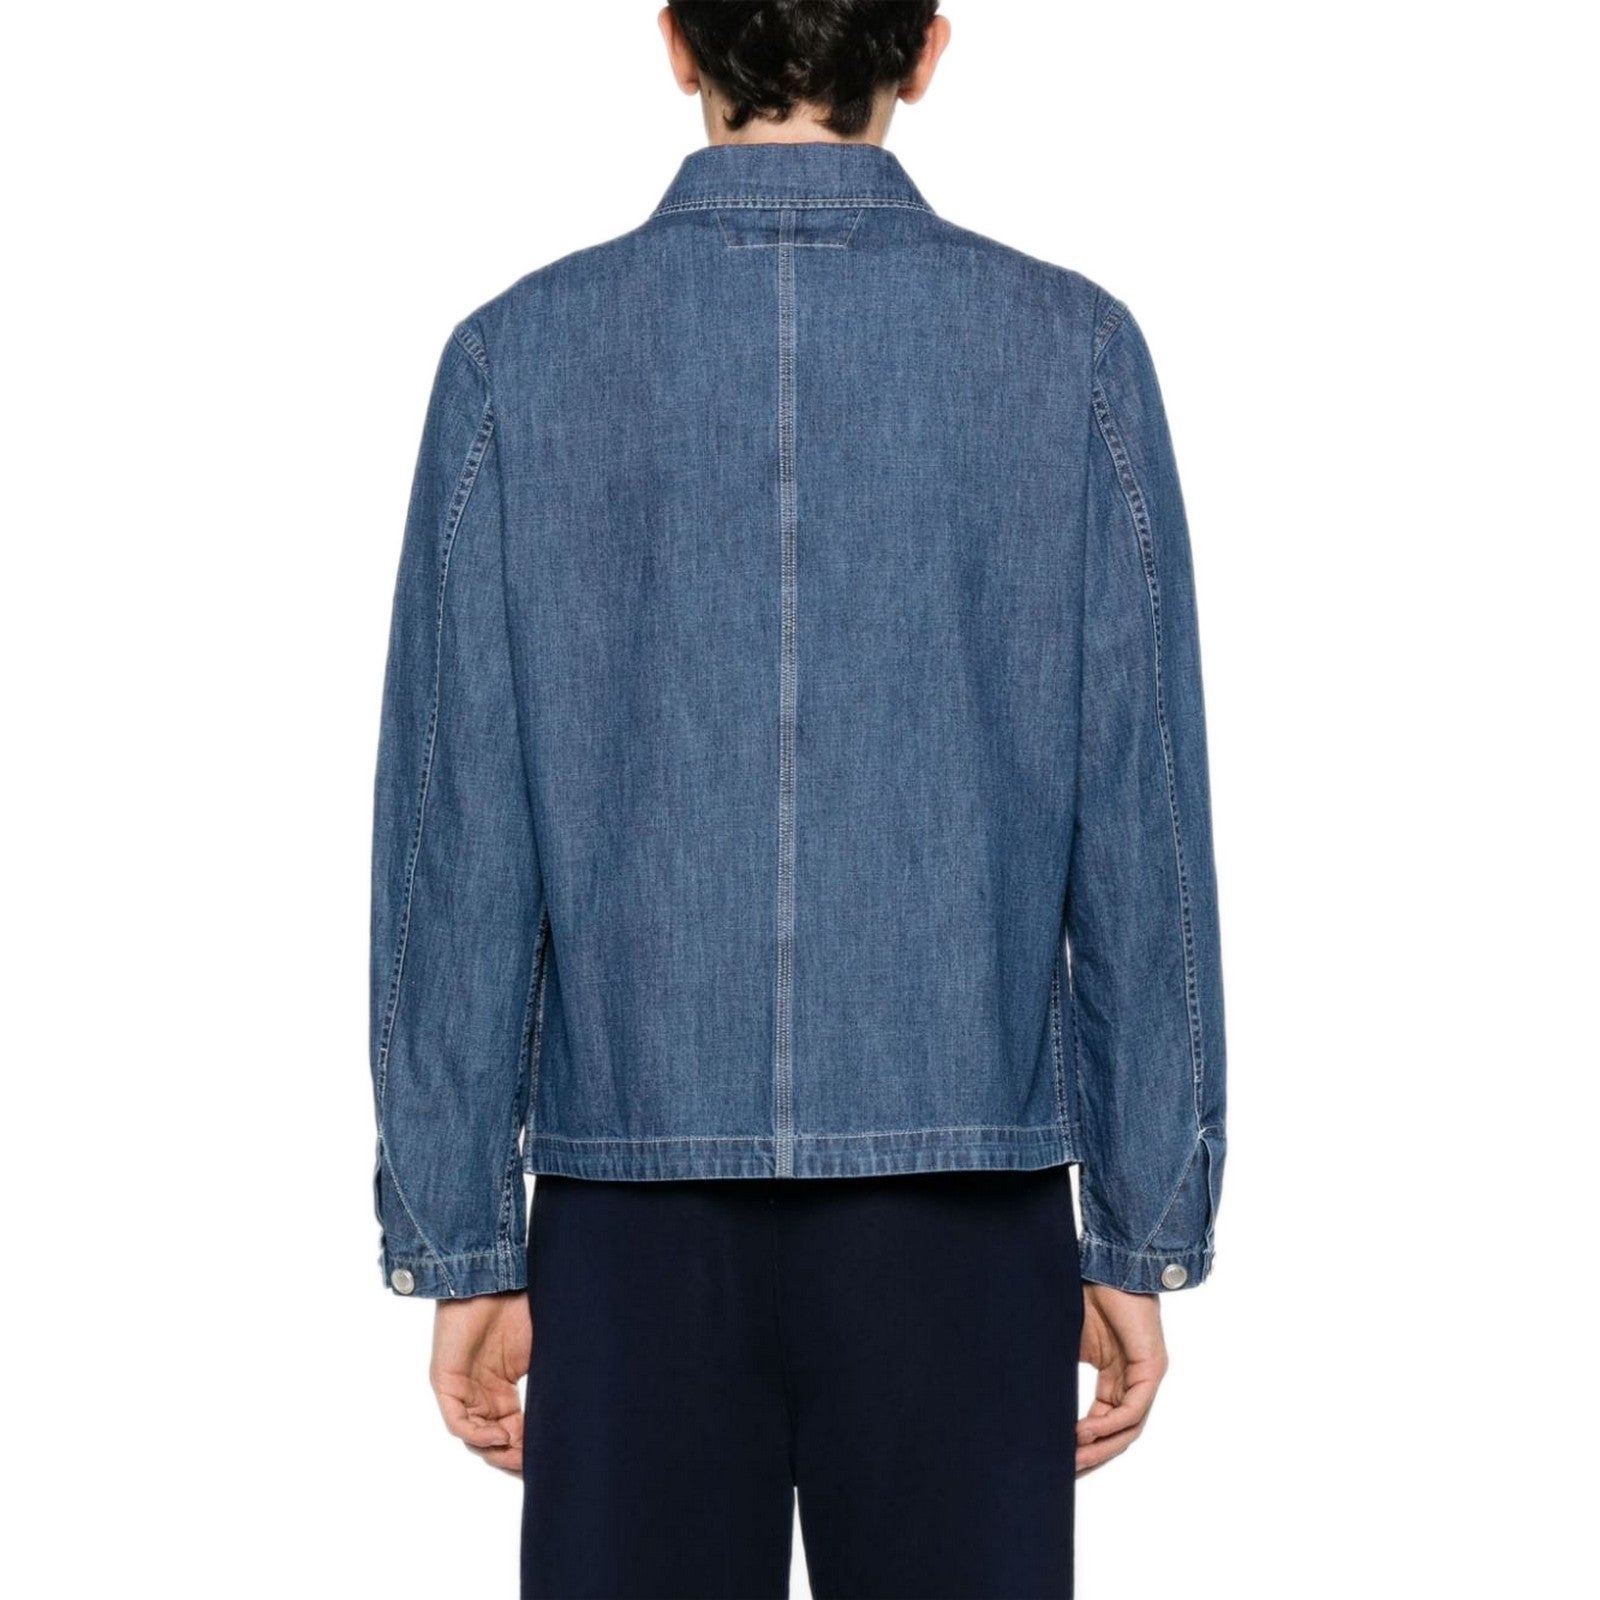 C.P. Company Outerwear Medium Jacket in Blu